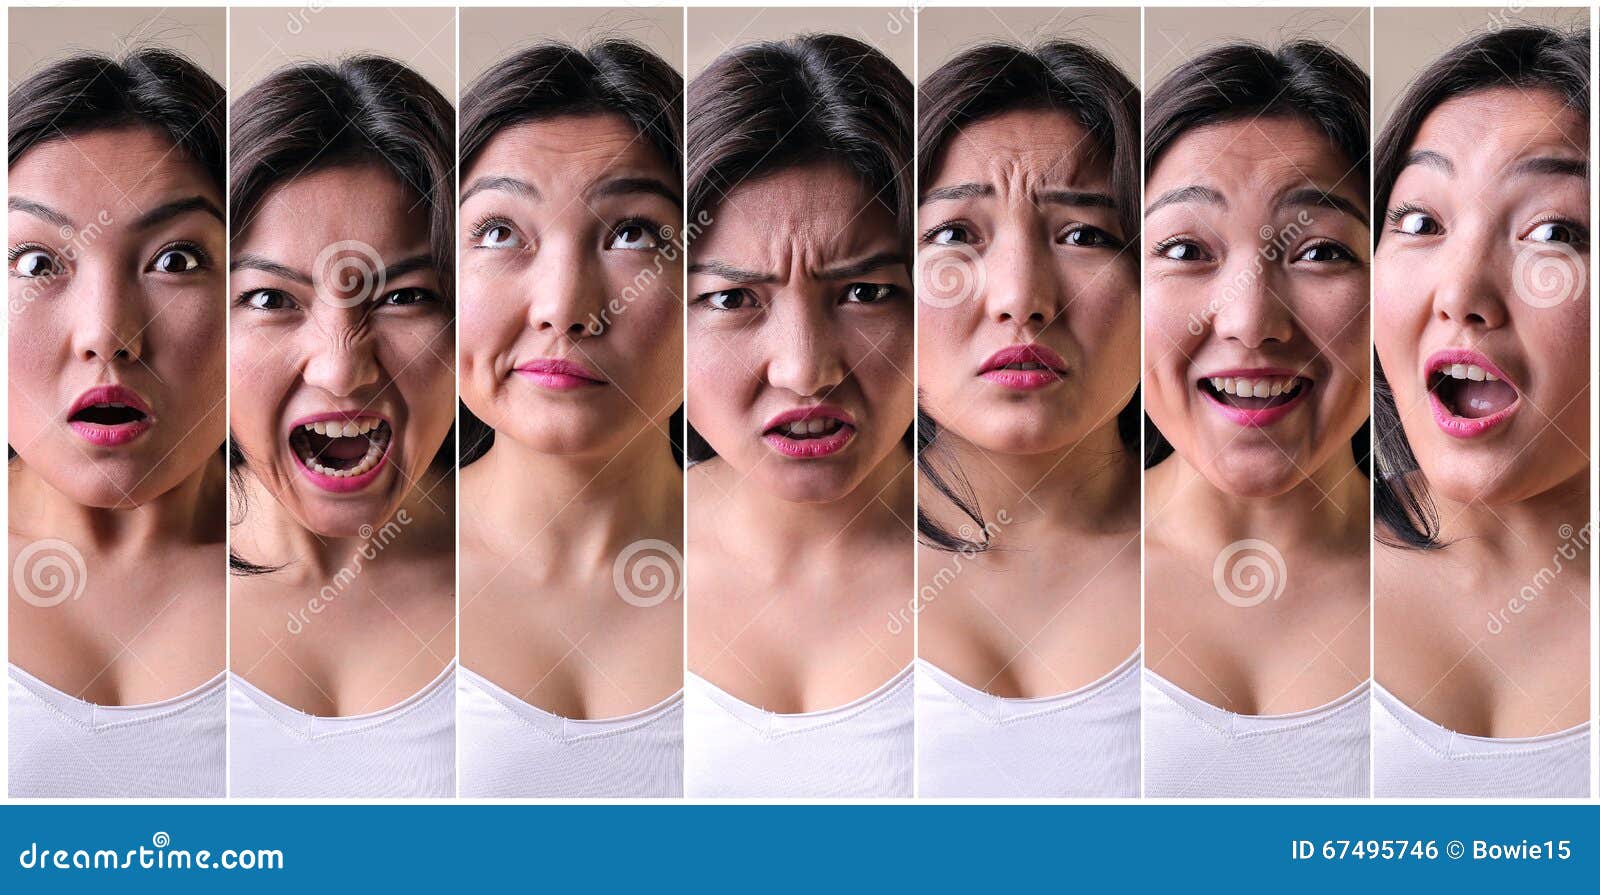 Asian Facial Expressions 37